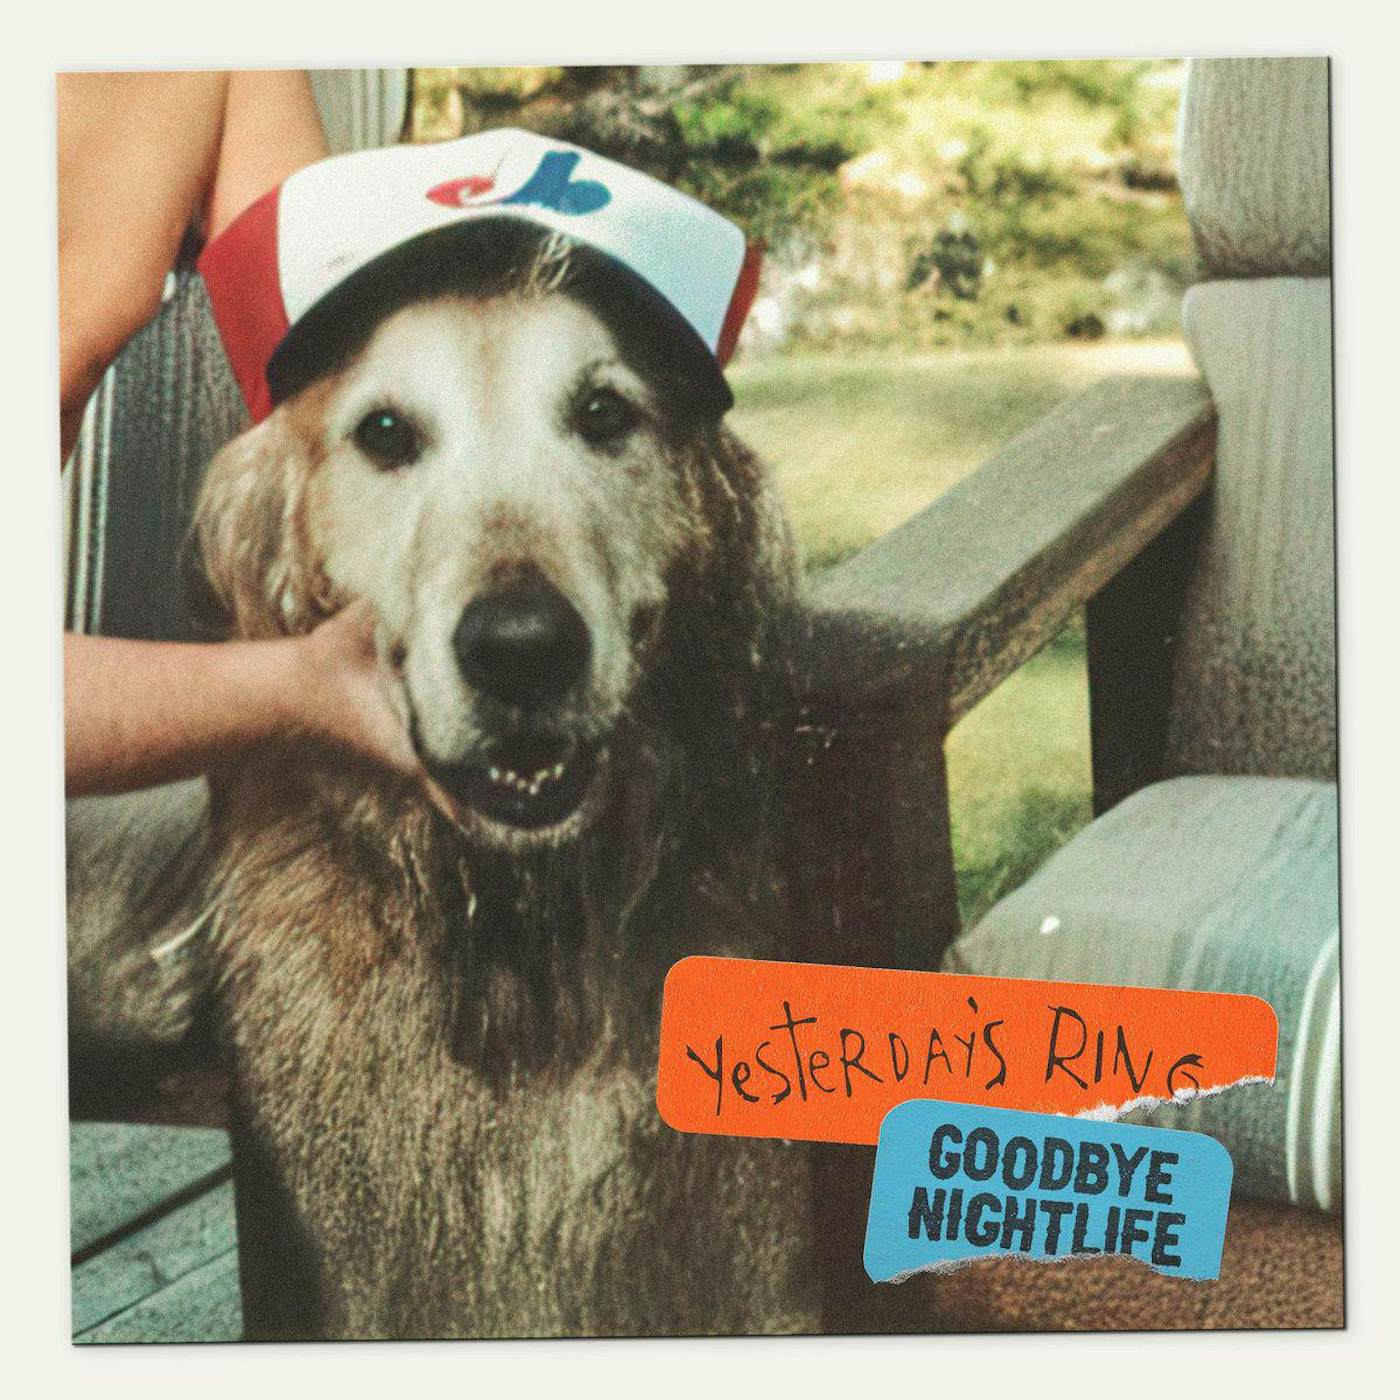 Yesterday's Ring / Goodbye Nightlife - LP Vinyle